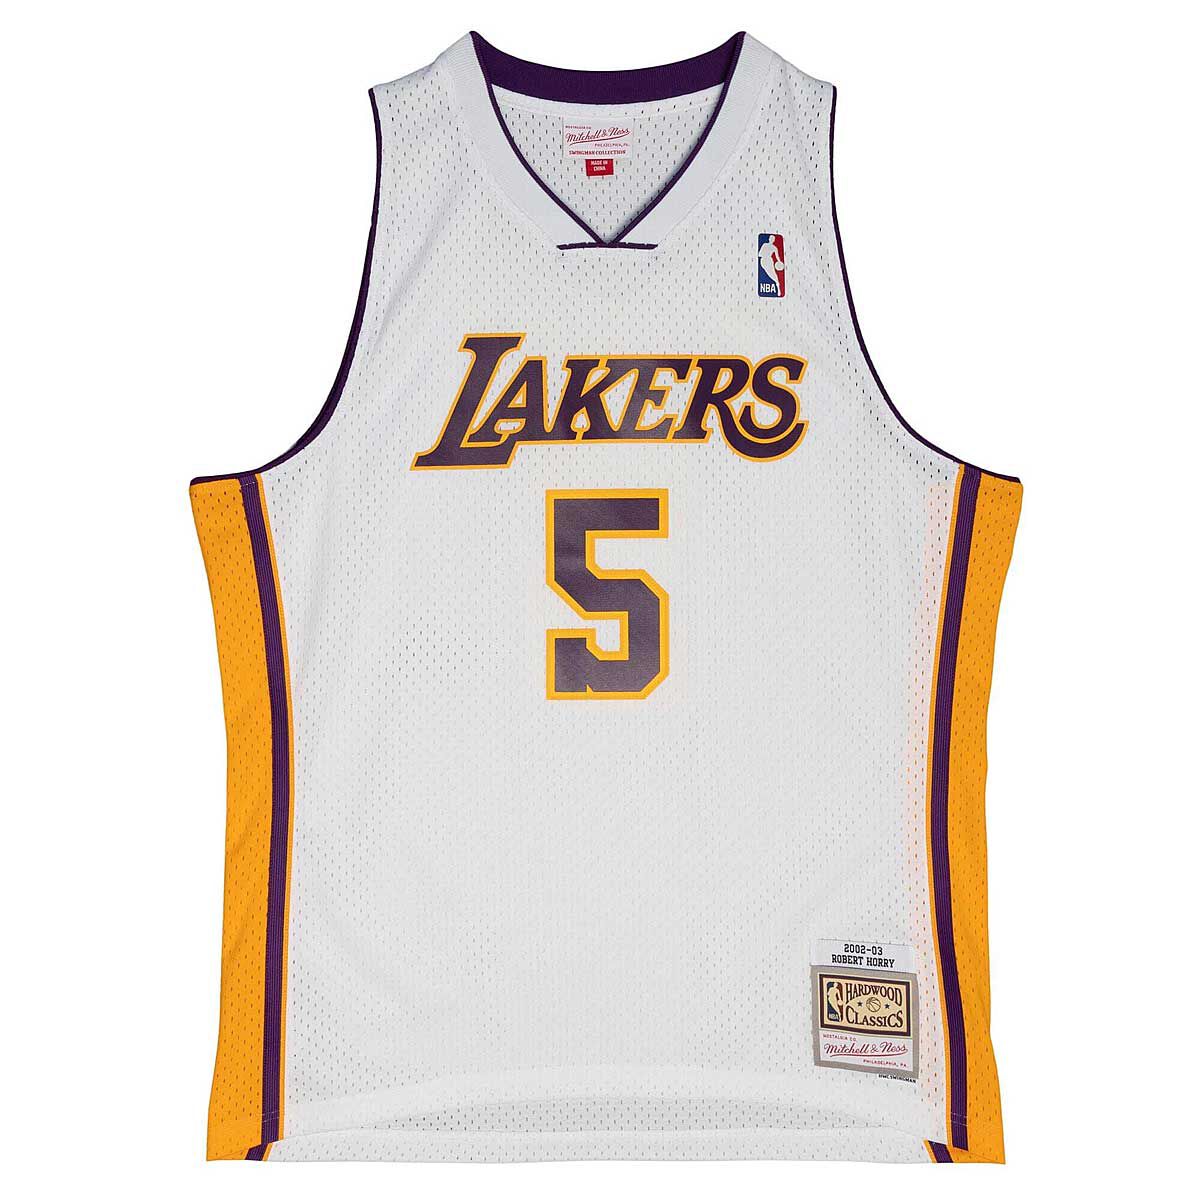 GAOZI Maillots De Basketball Homme Basket Maillots James #23 Lakers Basketball T-Shirt Jersey Maillot Sweat-Shirt Ensemble Maillot de débardeur Shorts 